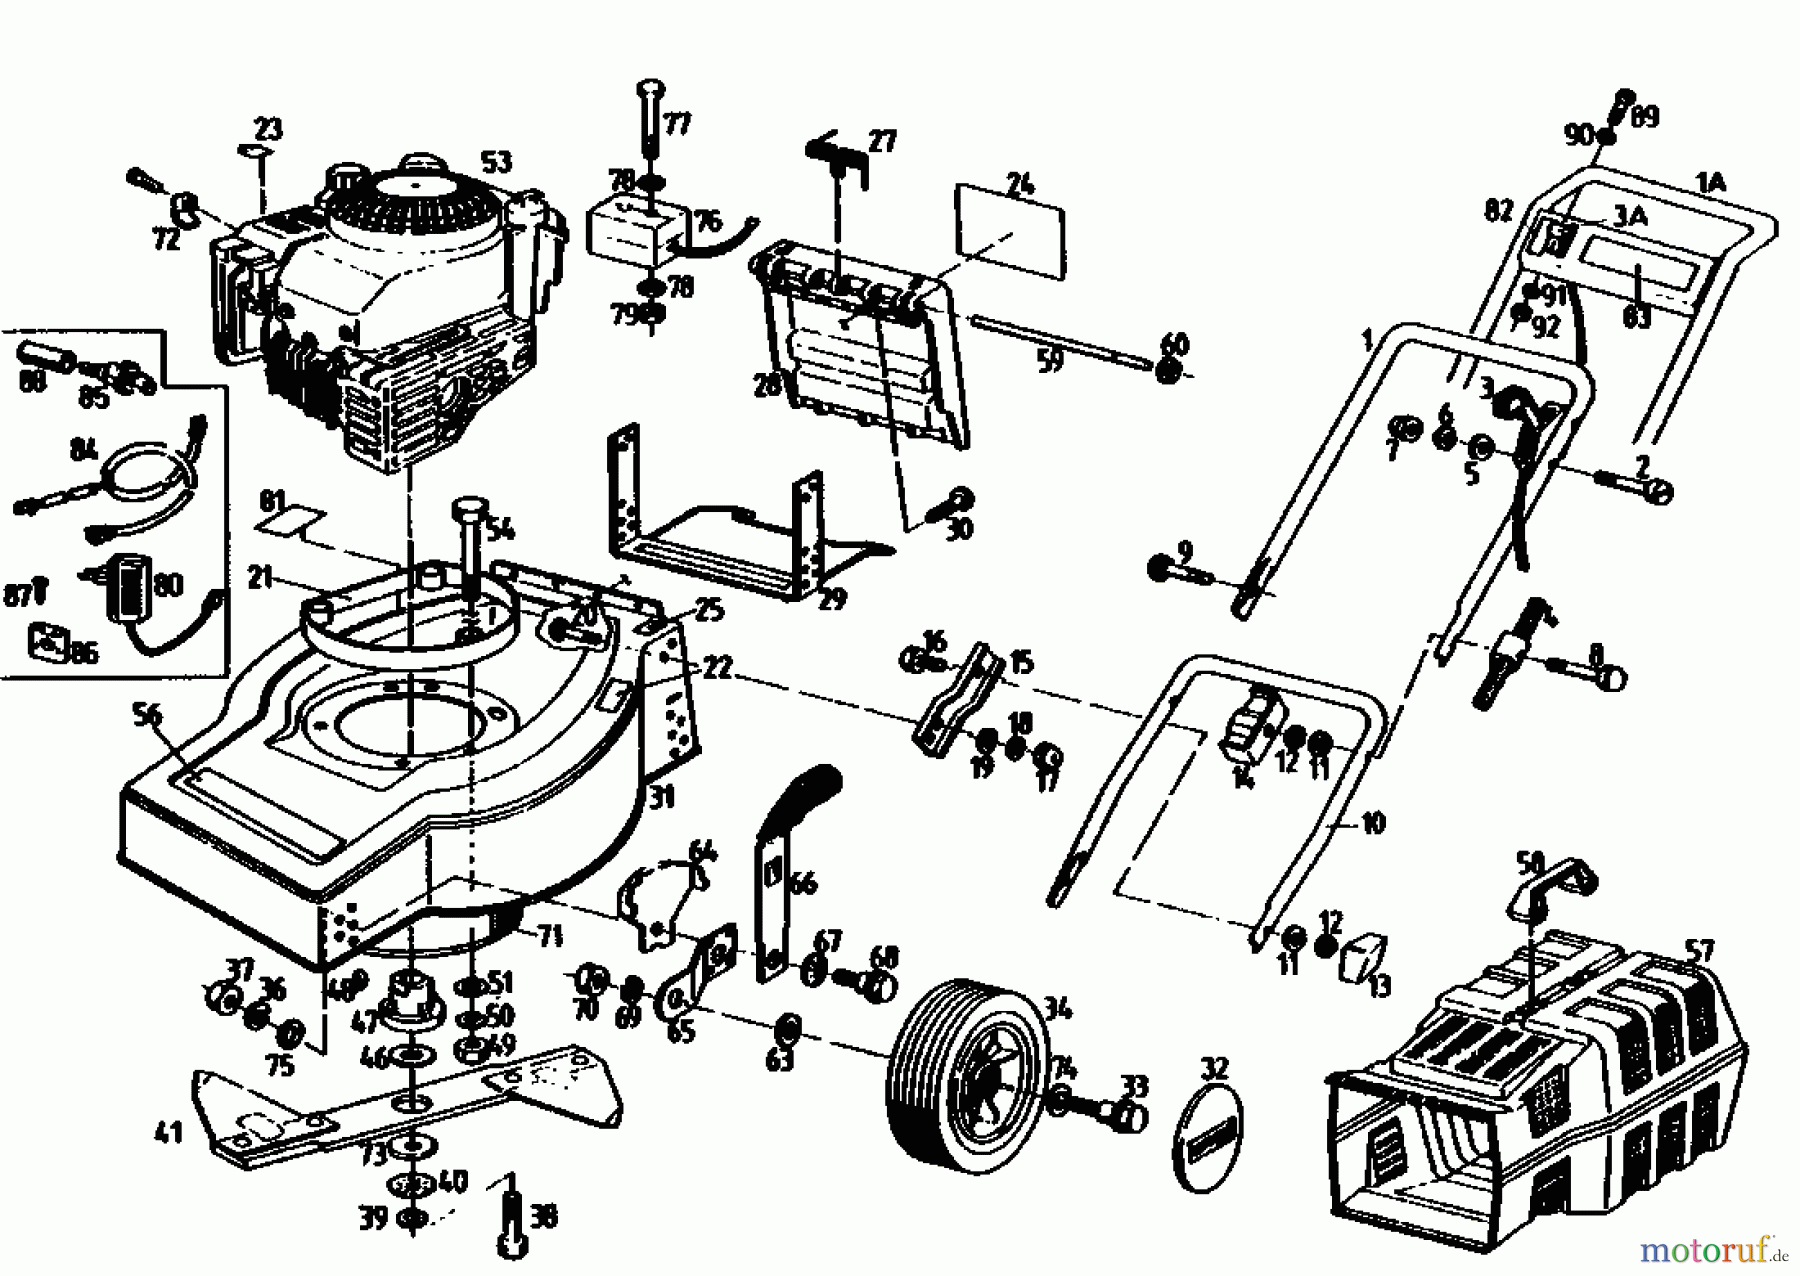  Gutbrod Petrol mower TURBO HBSE 02893.07  (1992) Basic machine